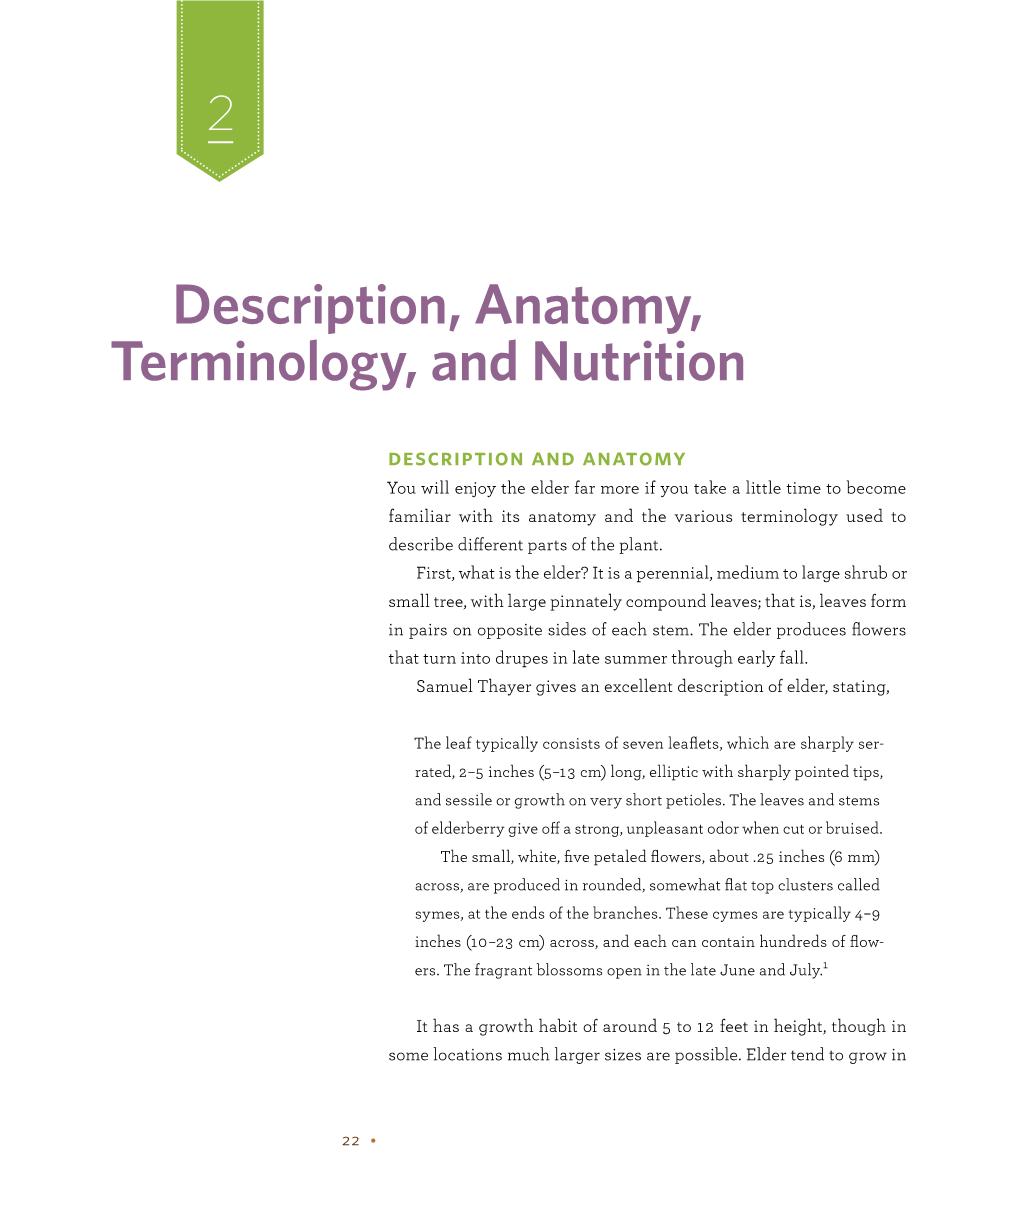 Description, Anatomy, Terminology, and Nutrition